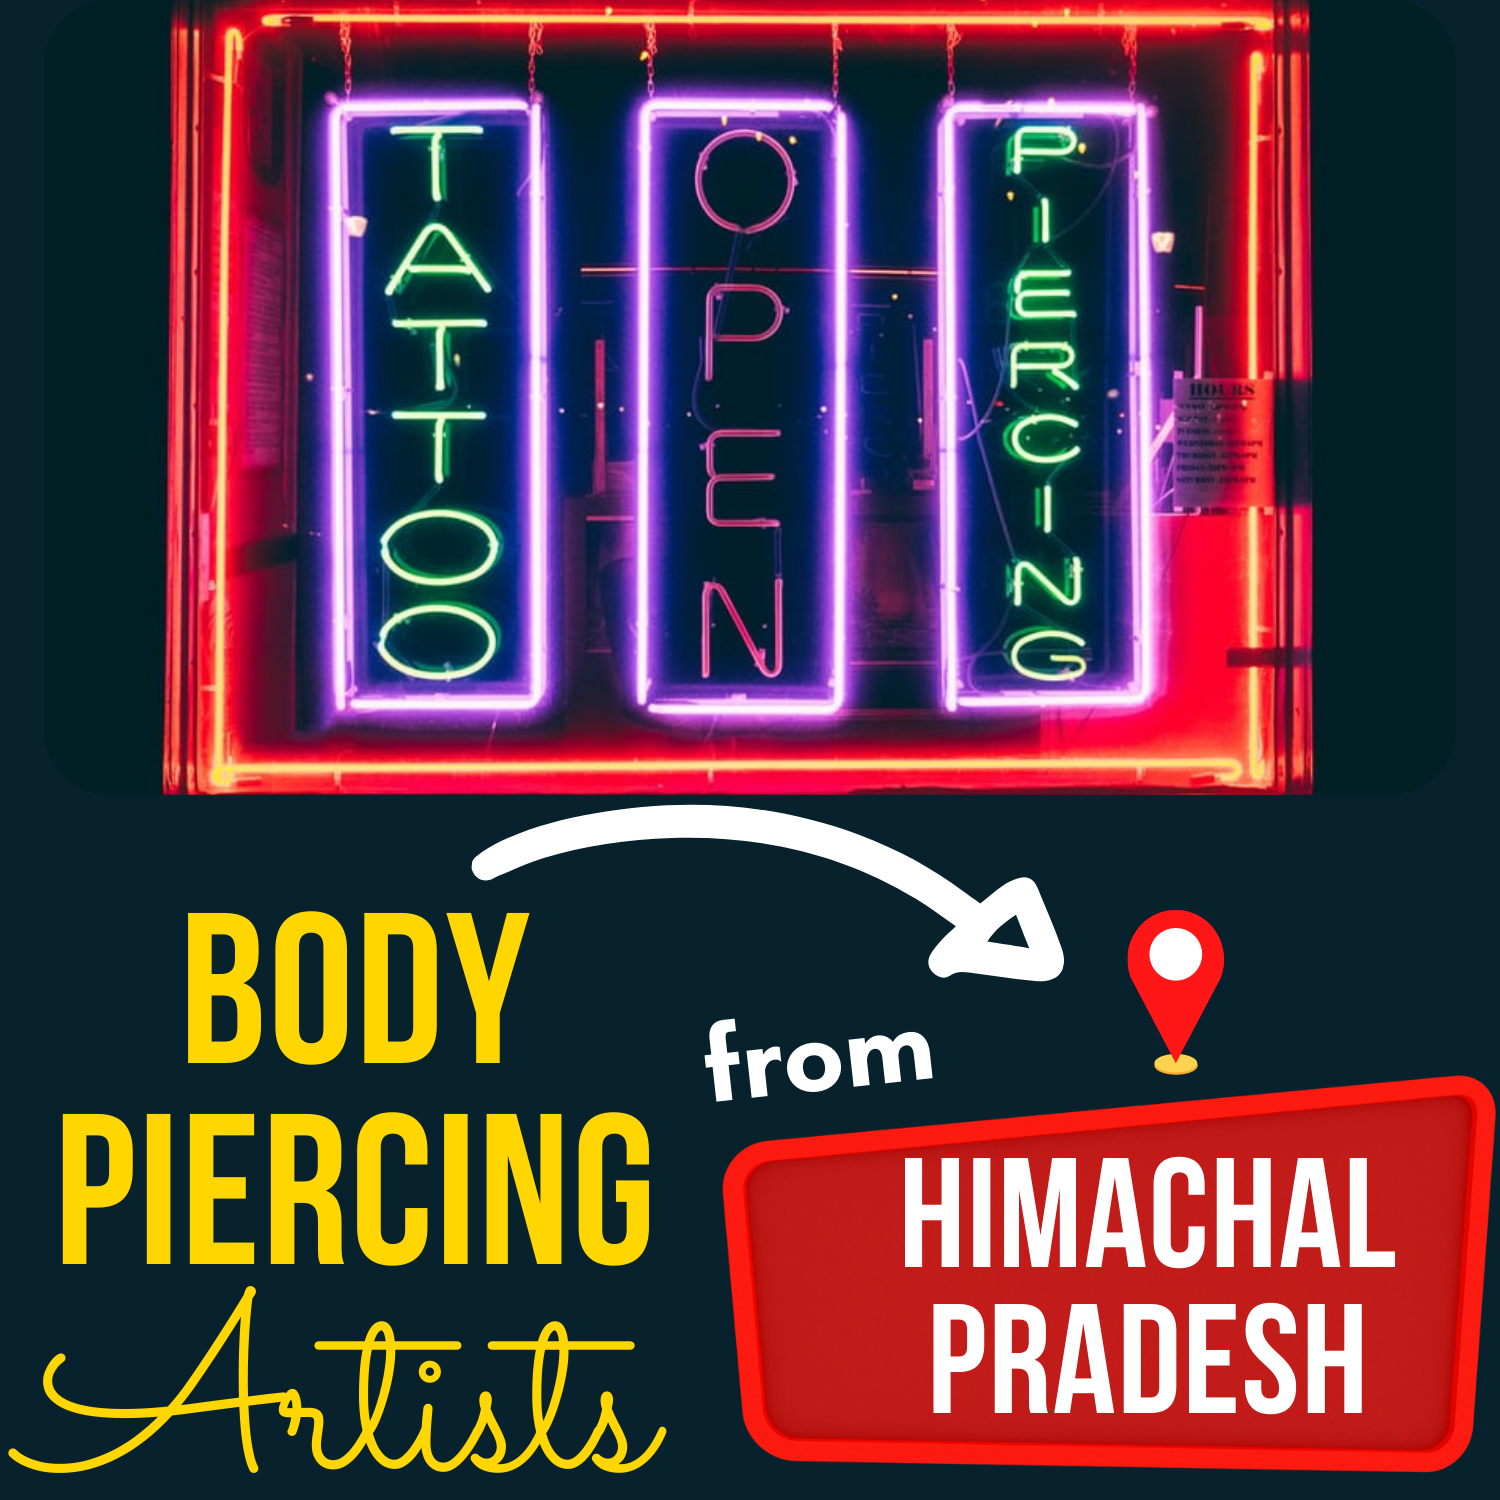 BODY PIERCING Studios from Himachal Pradesh to visit now